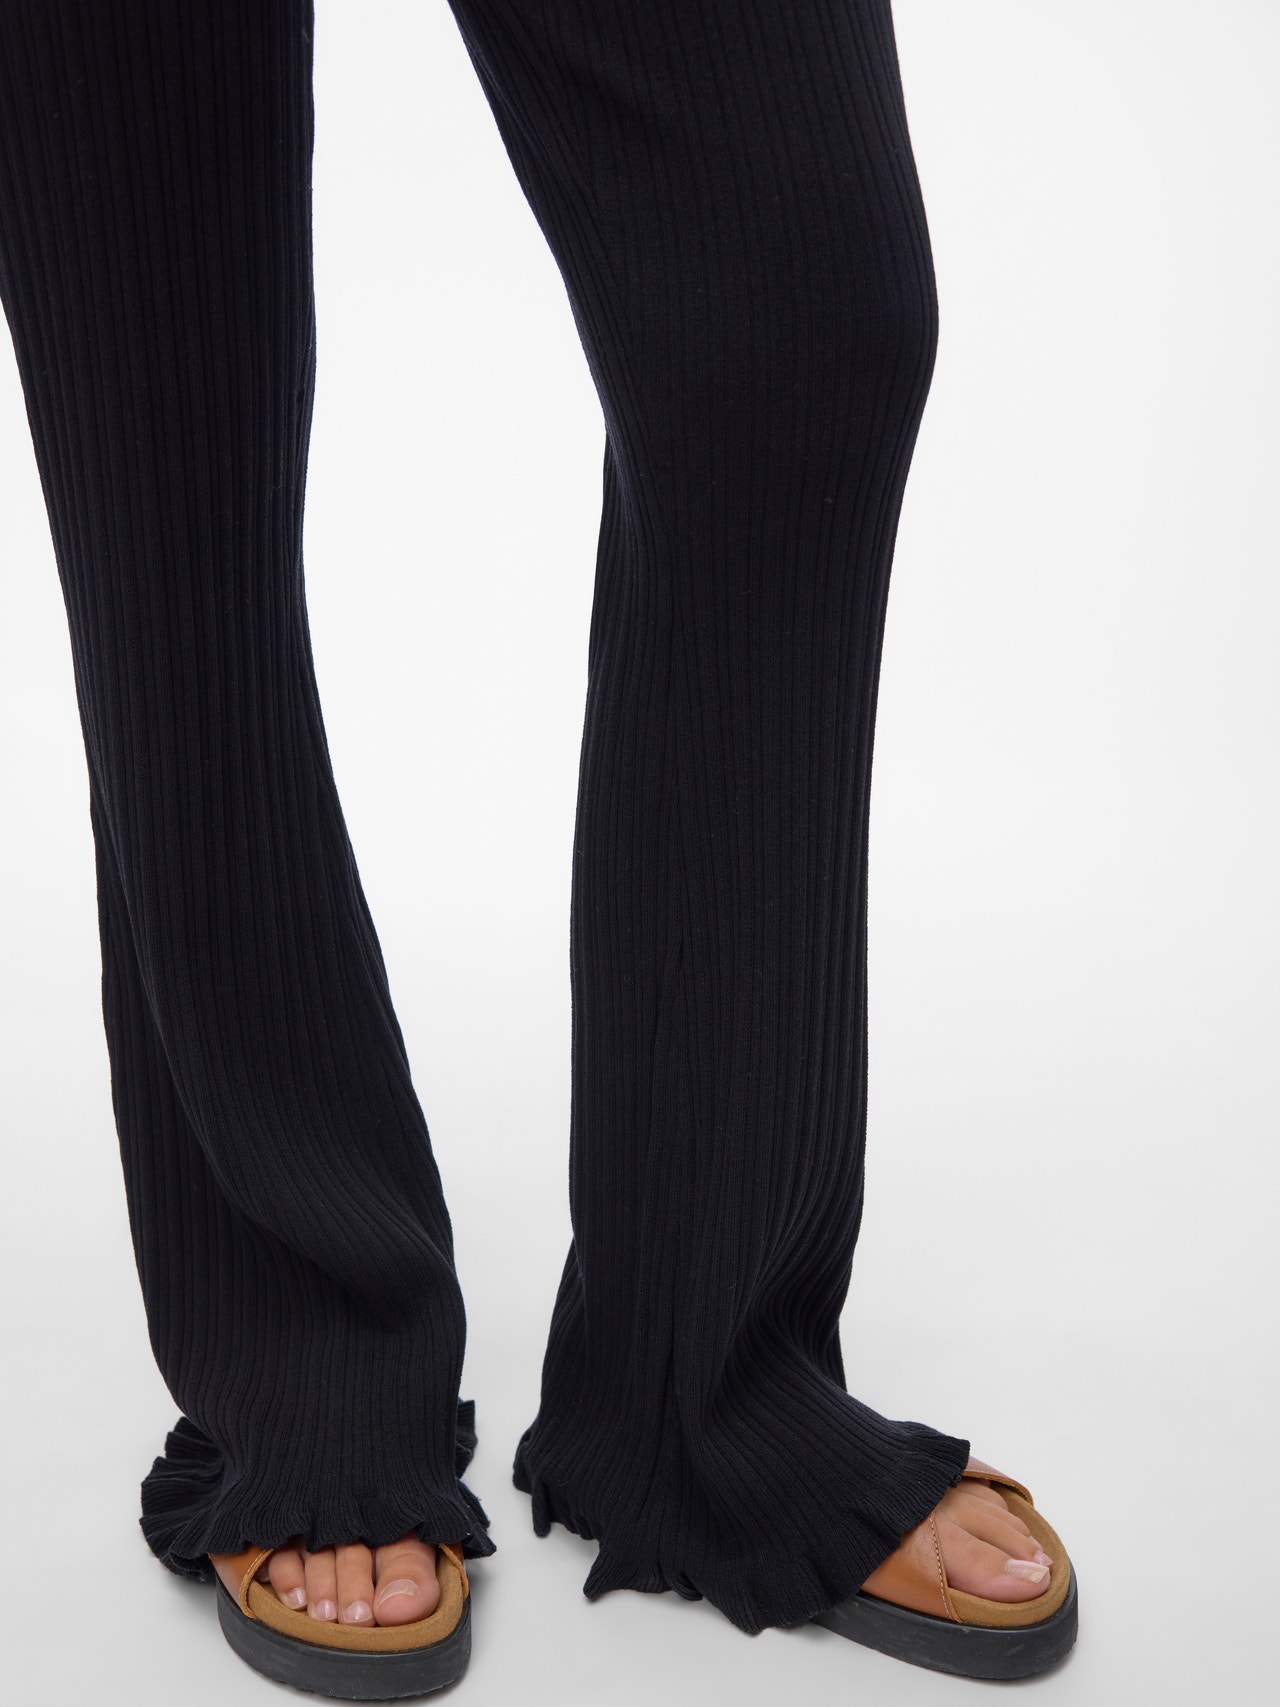 Vero Moda VMJADE Trousers -Black - 10304177